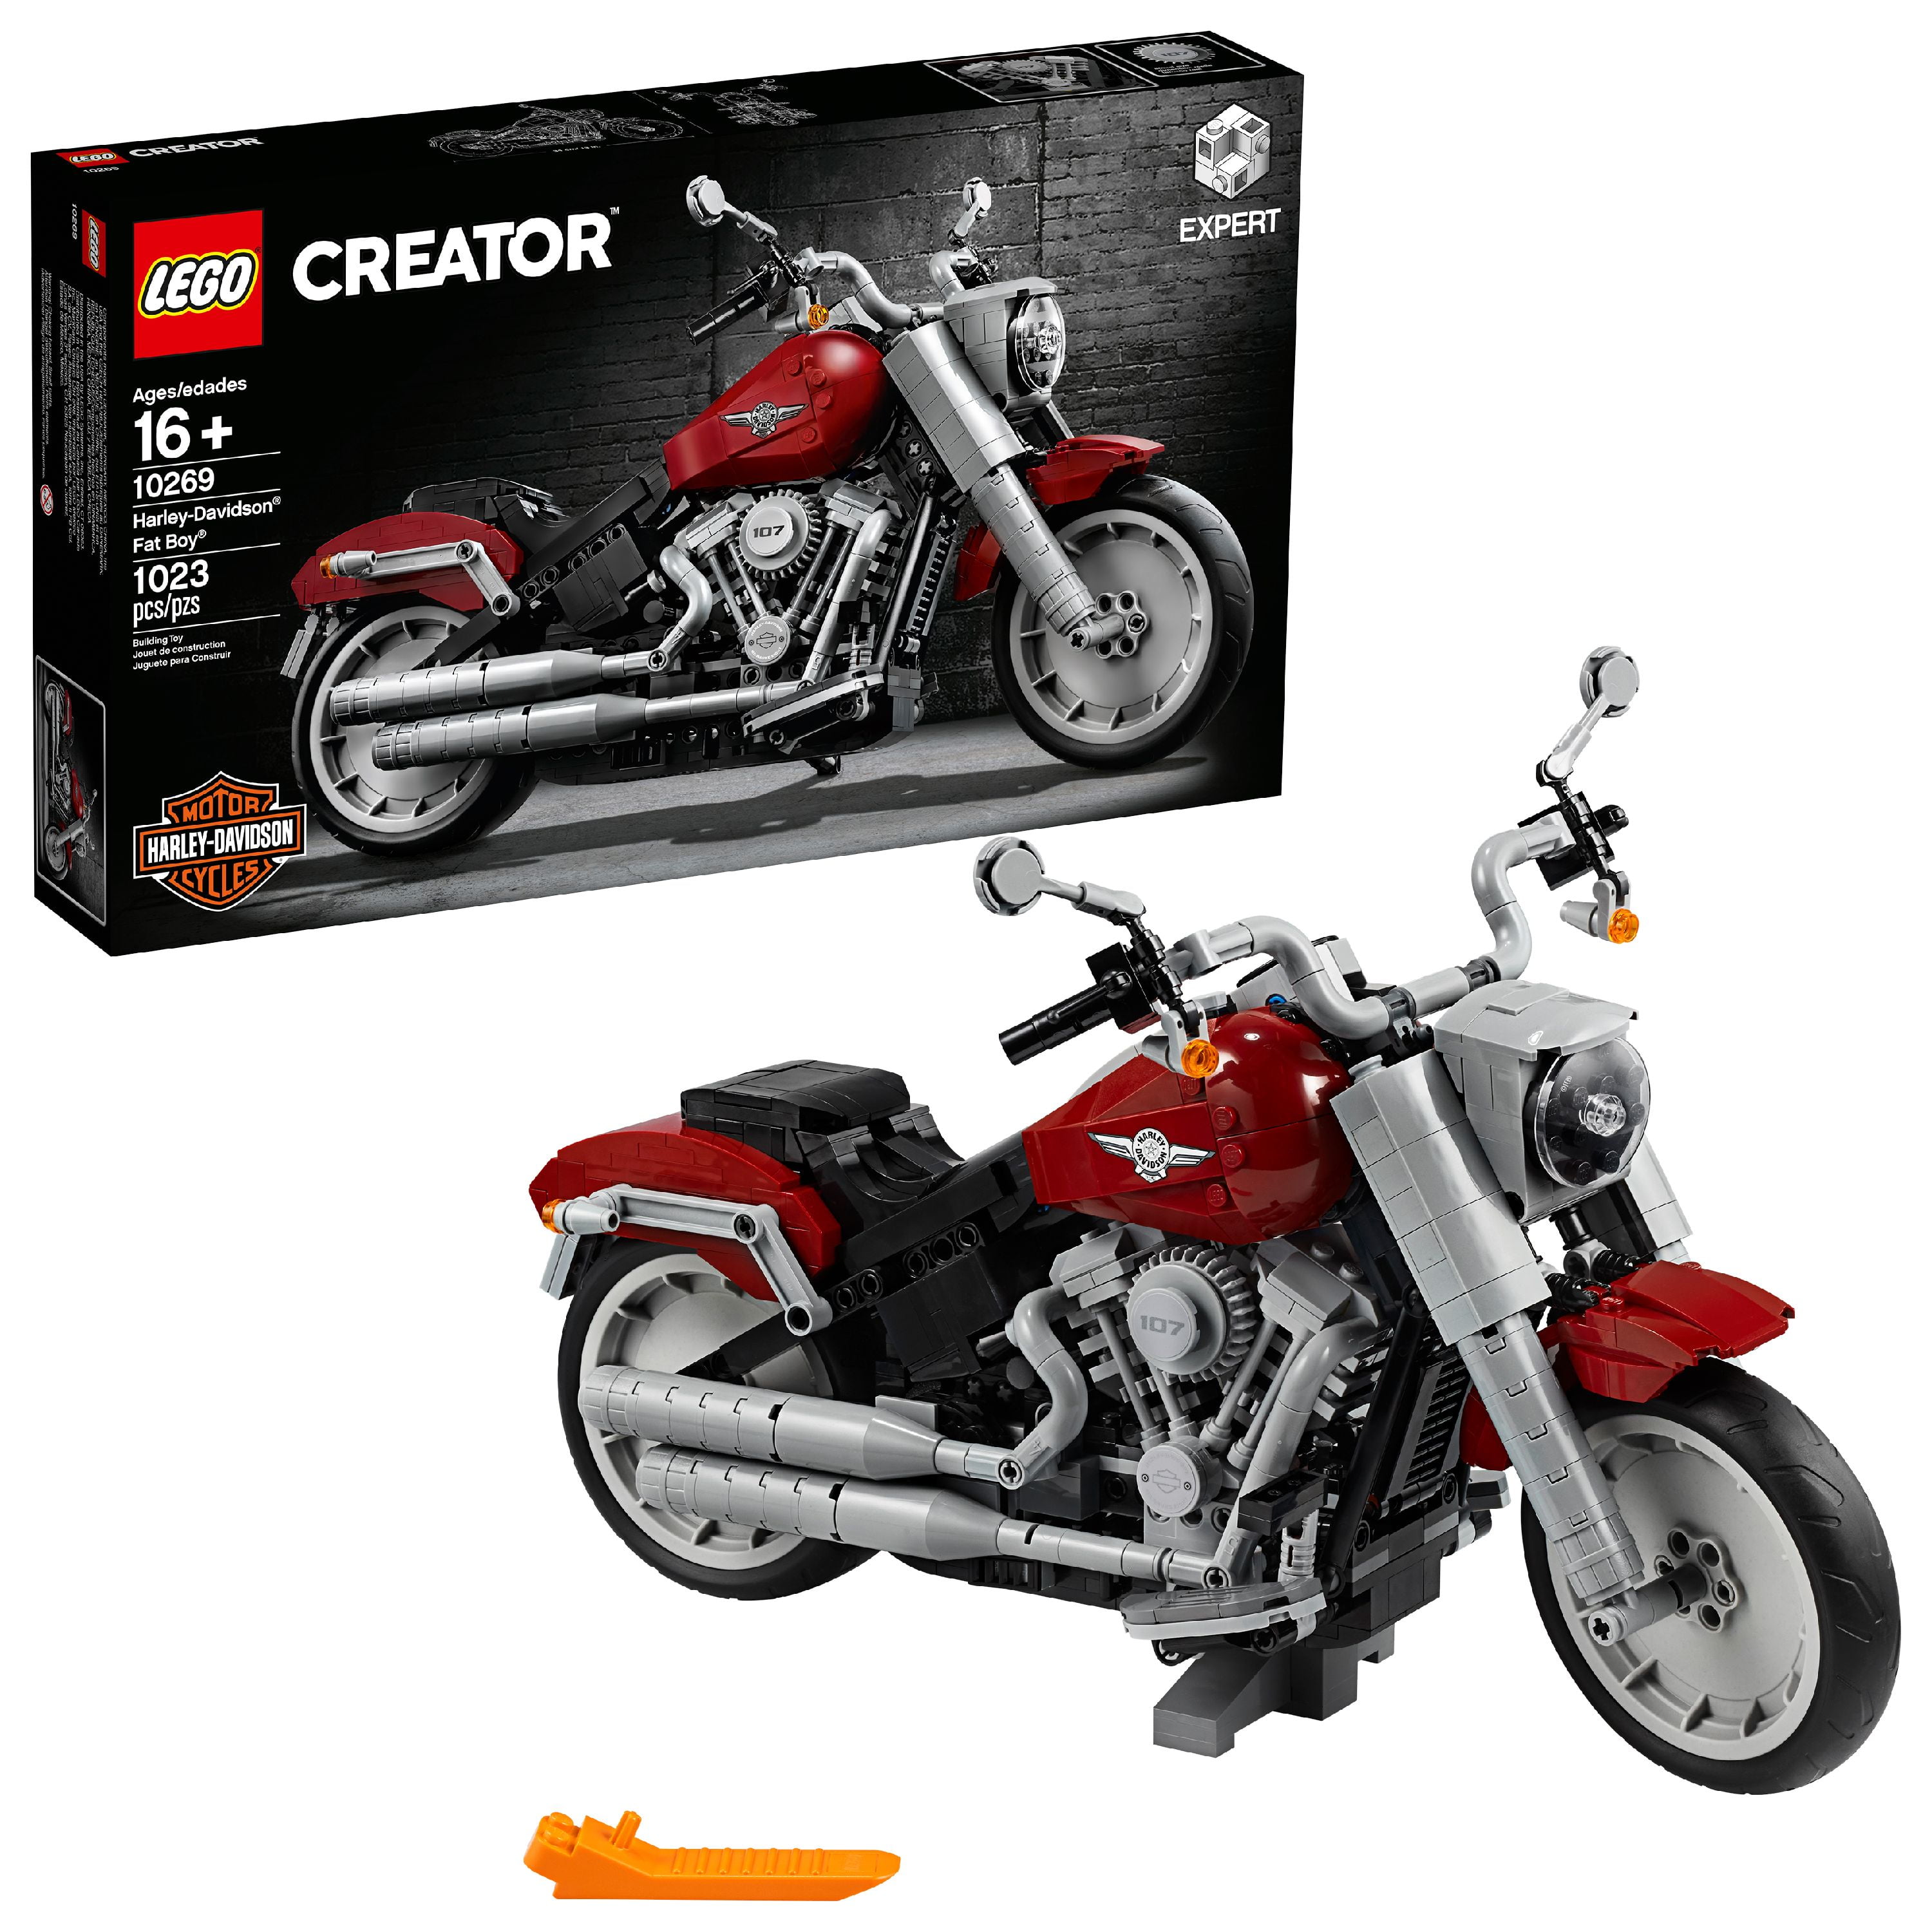 Pare-brise 2 x 10 x 3 LEGO Creator Set 10252 10258 75144 Réf 24607 